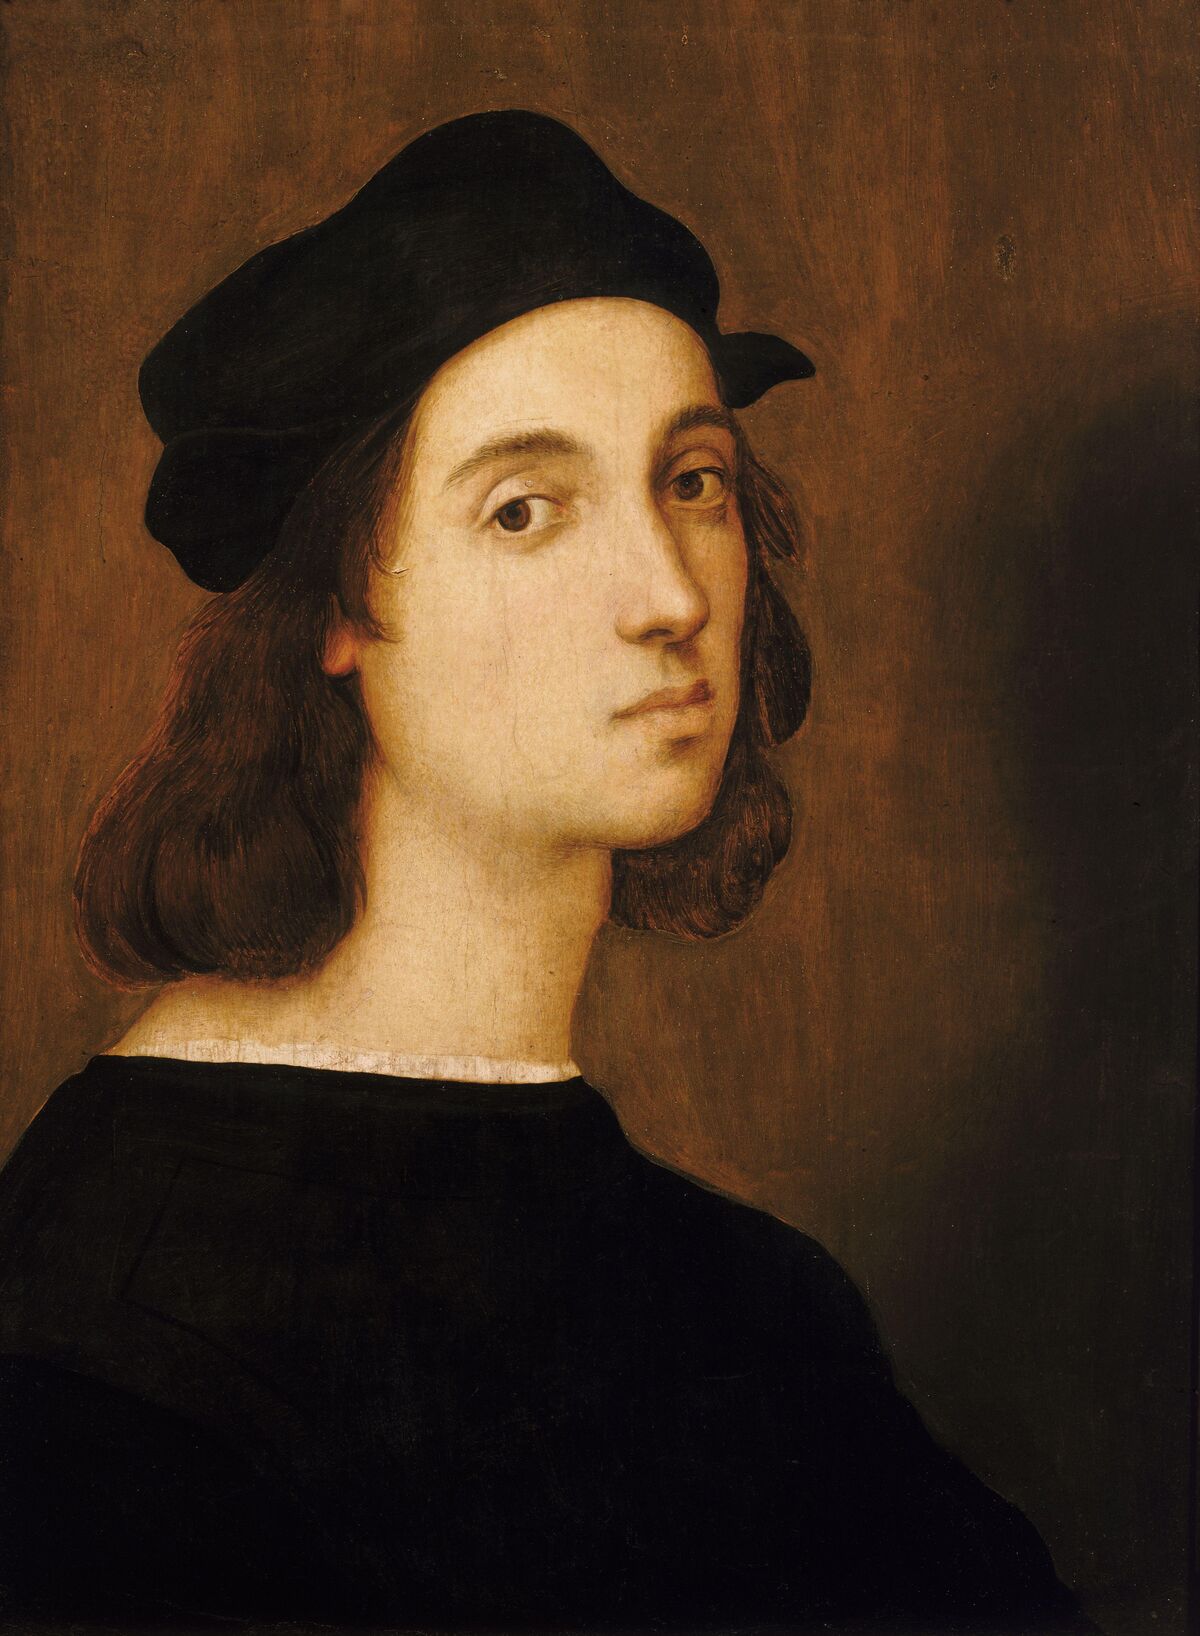 Raphael, Self-portrait, ca. 1506. Image via Wikimedia Commons.